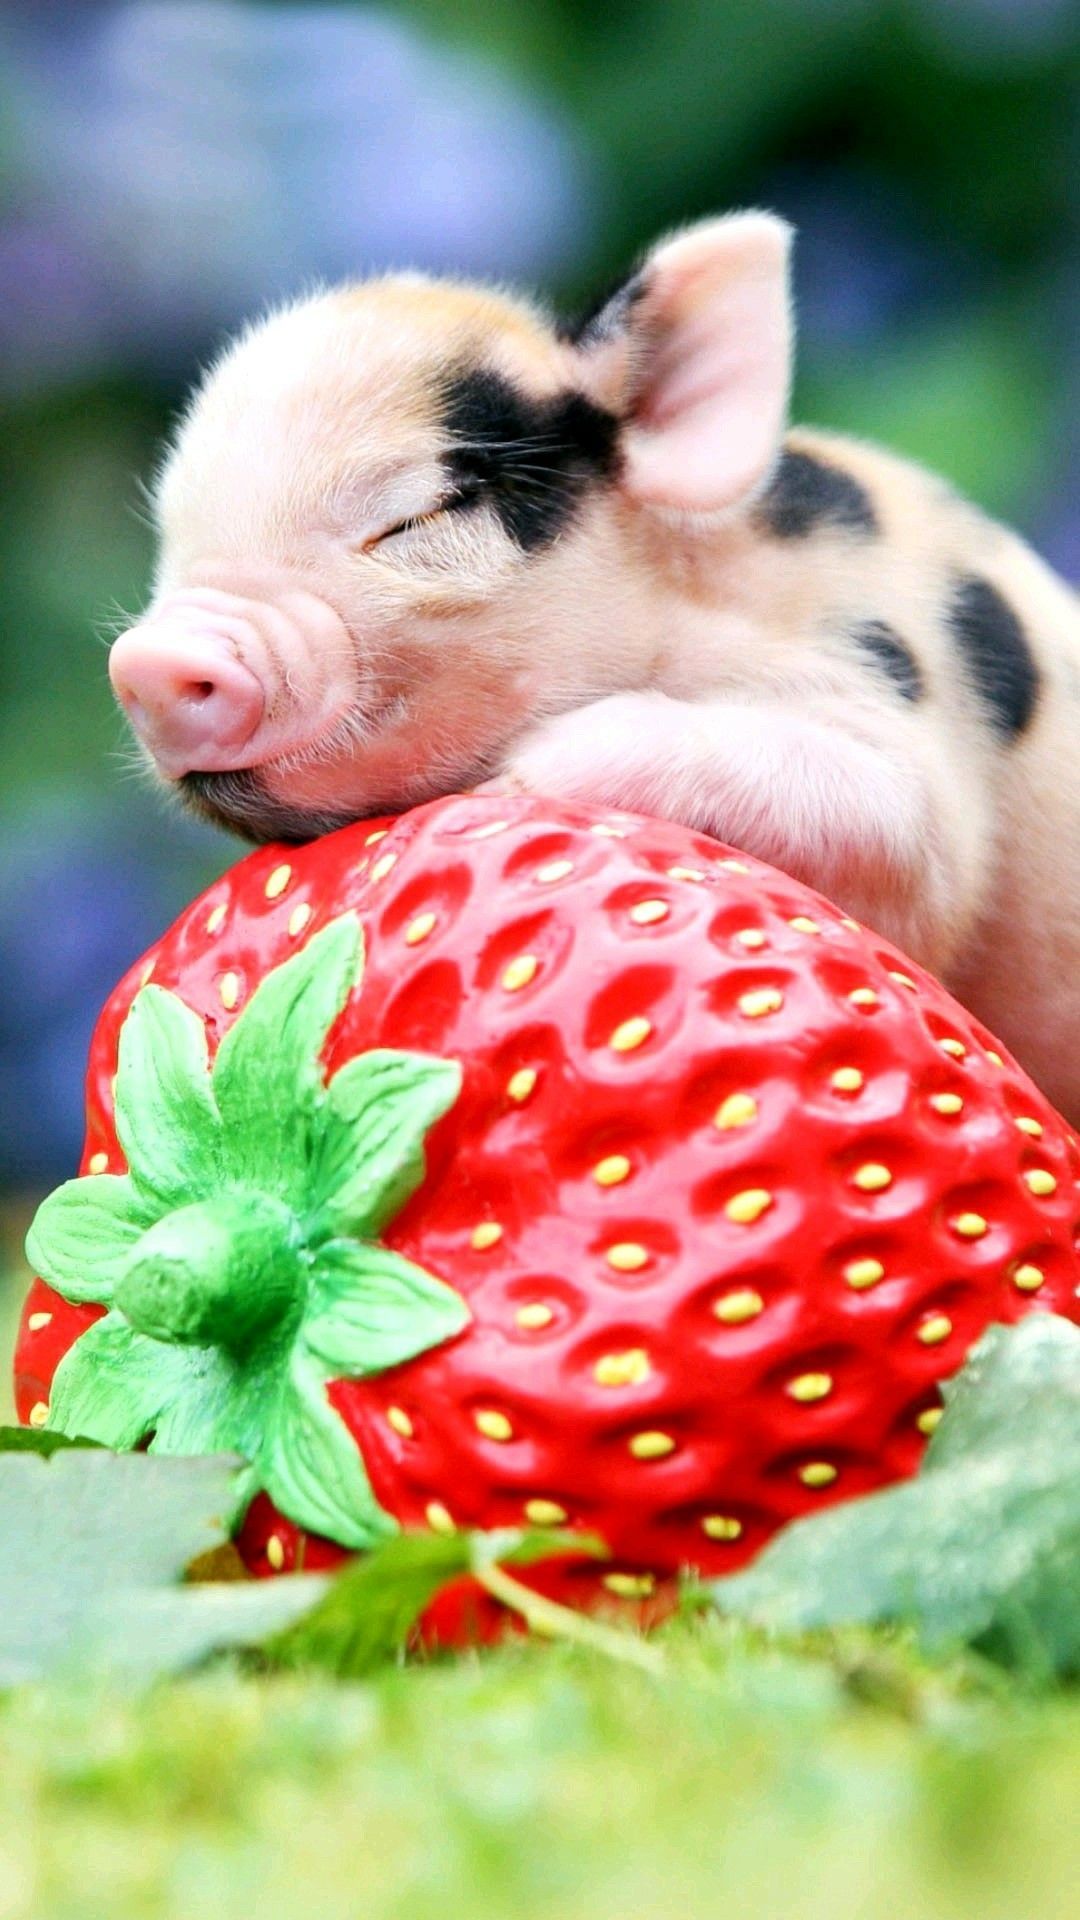 Baby pig on a strawberry wallpaper .com